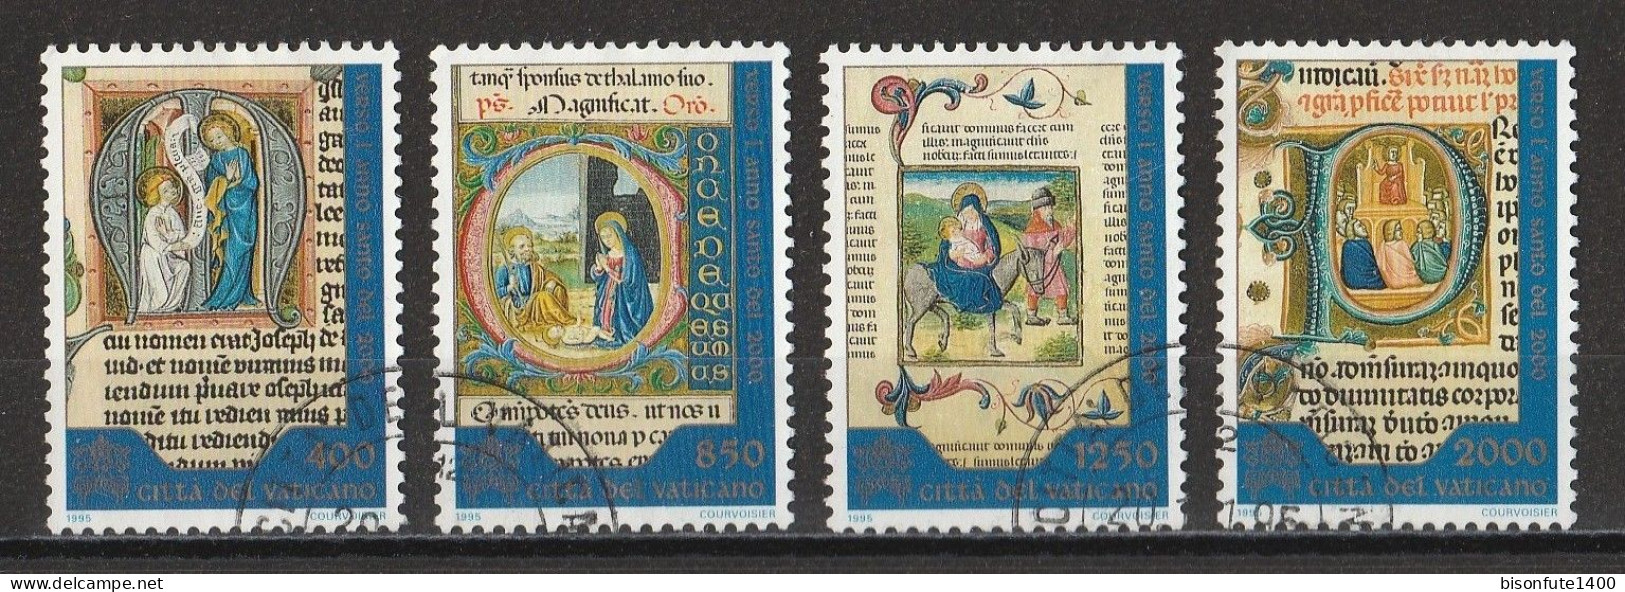 Vatican 1995 : Timbres Yvert & Tellier N° 1025 - 1026 - 1027 Et 1028 Oblitérés - Used Stamps